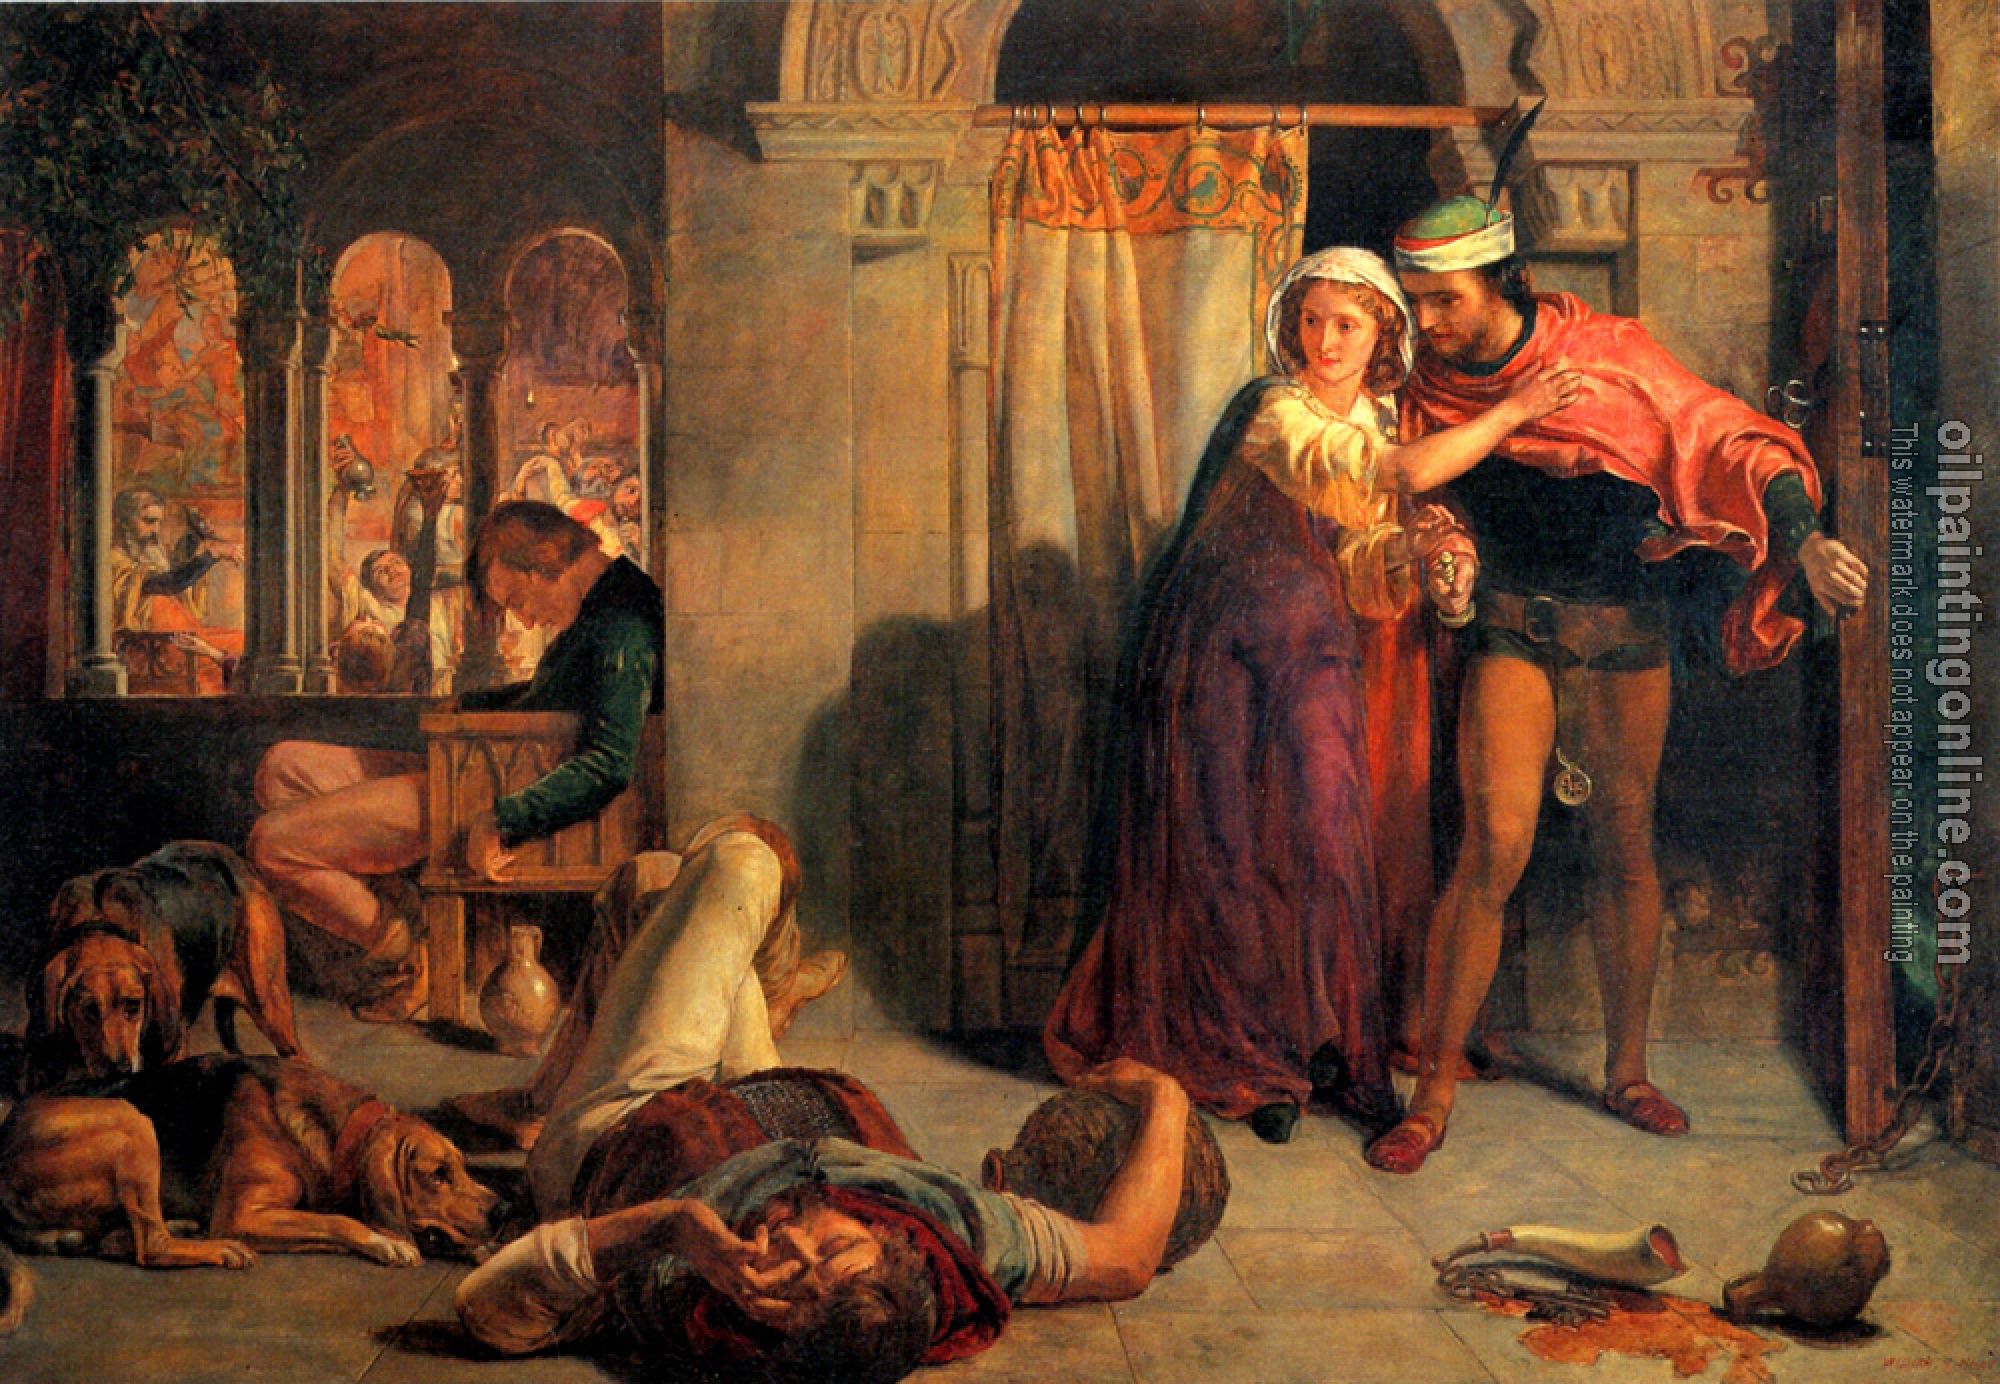 Hunt, William Holman - The flight of Madeline and Porphyro during the Drunkenness attending the Reve